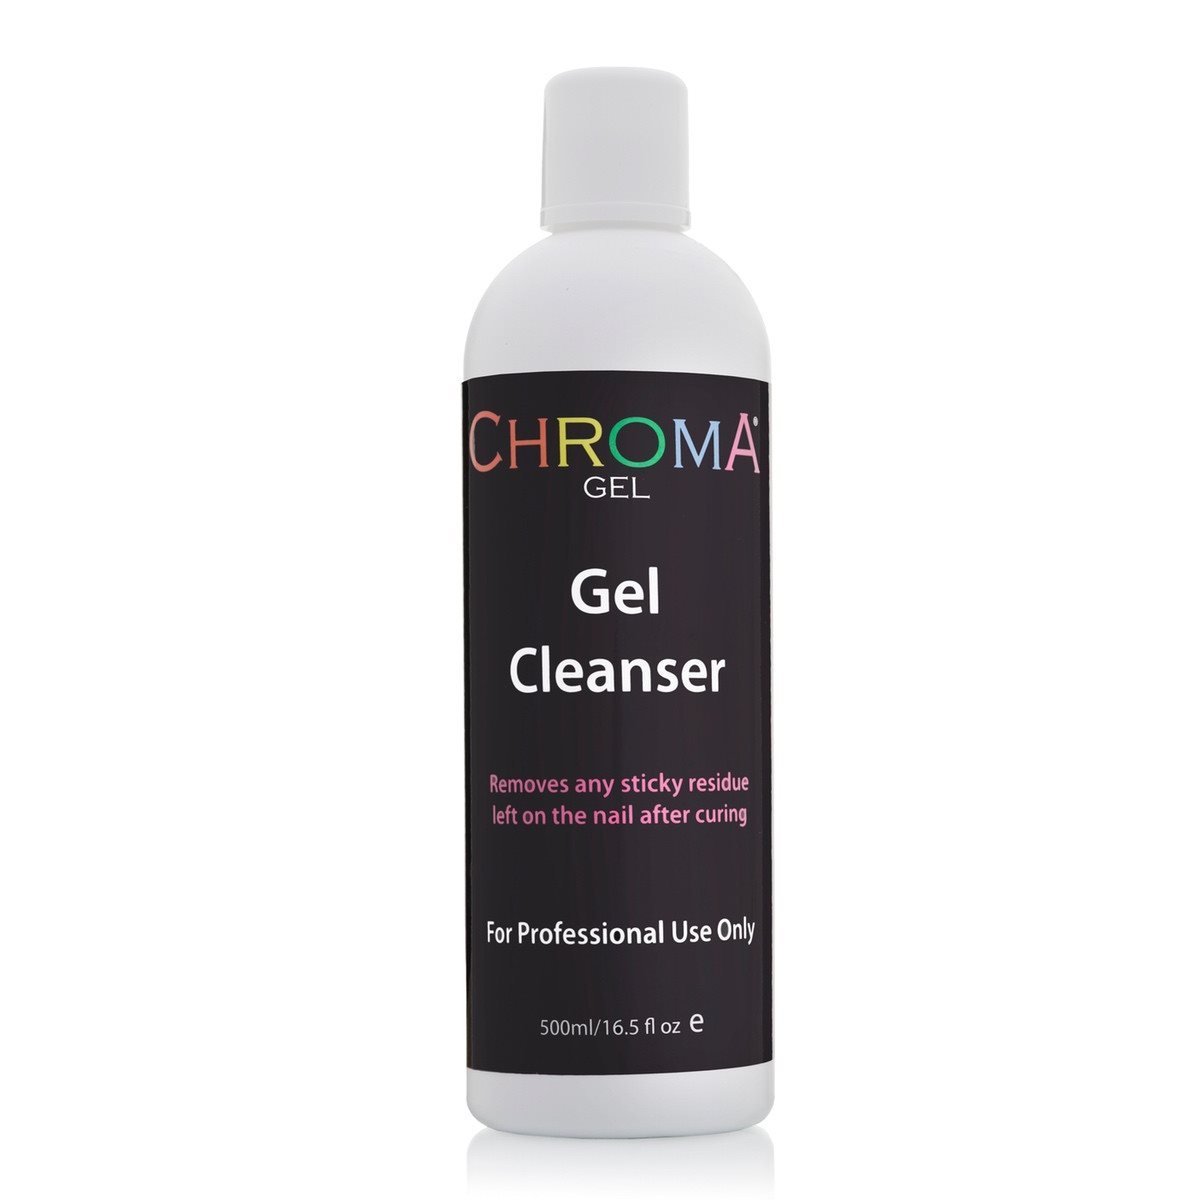 Chroma Gel | Gel Cleanser - Chroma Gel